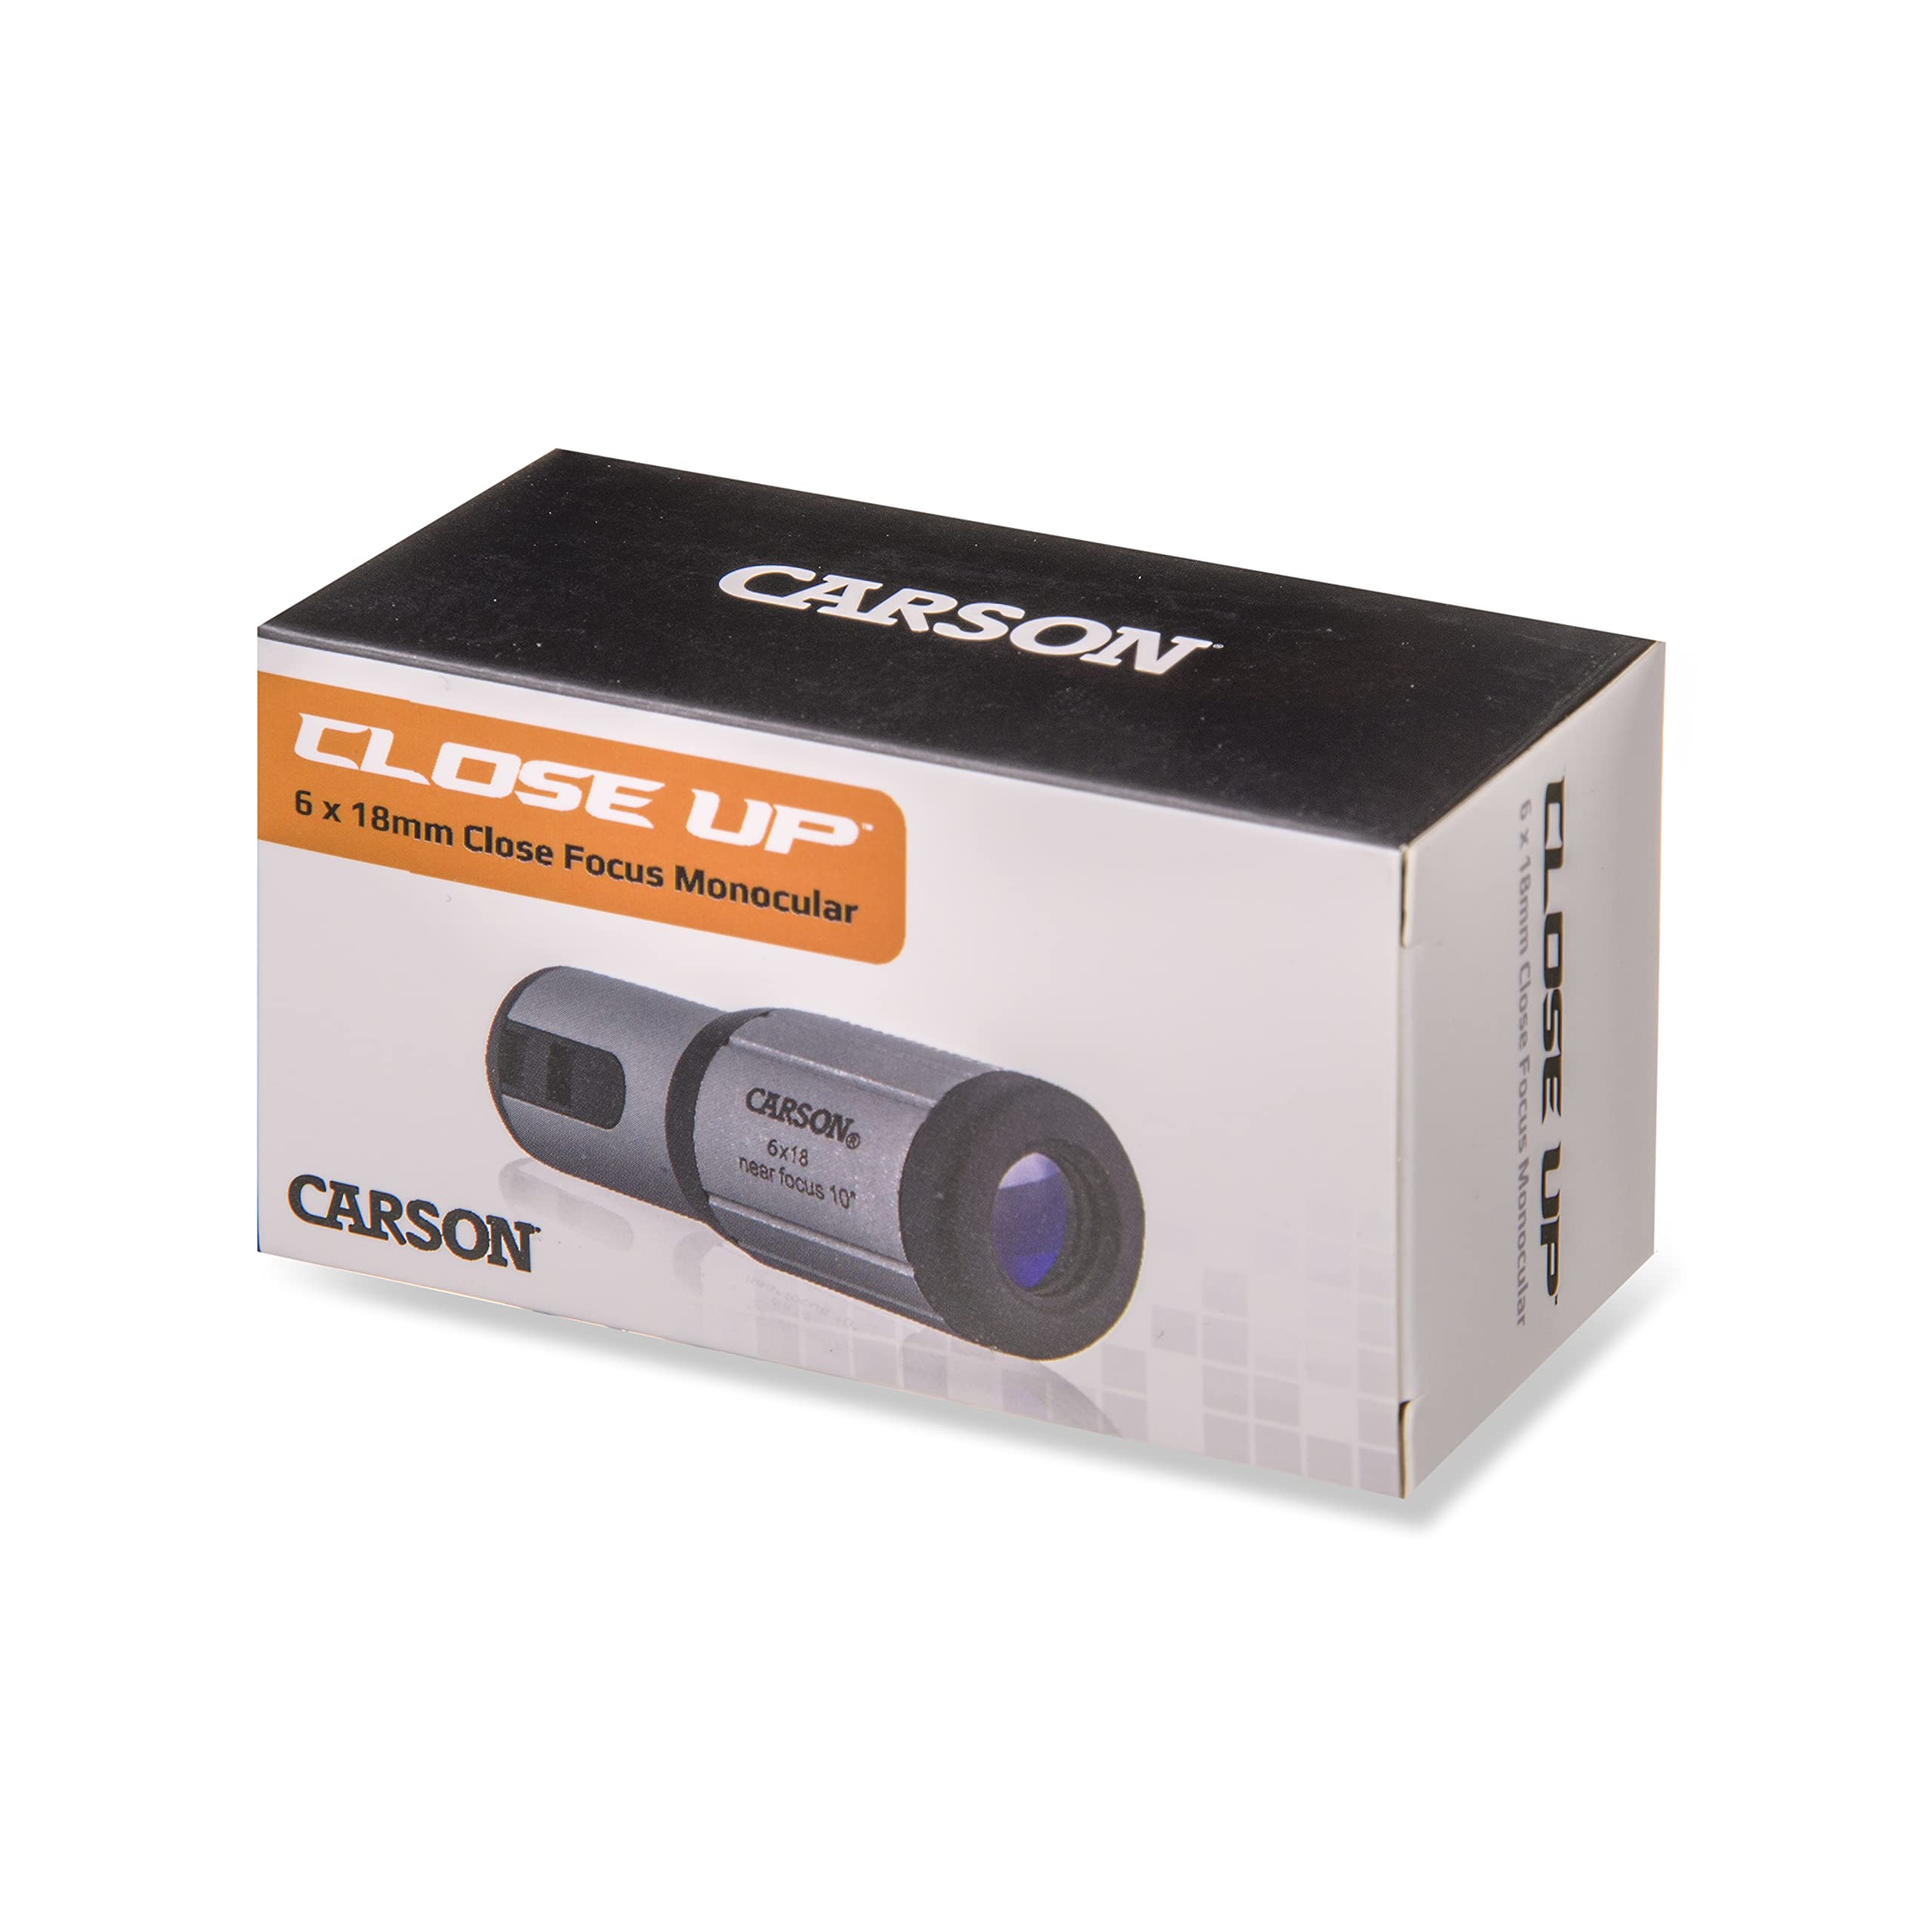 Carson CloseUp 6x18mm Close-Focus Monocular (CF-618)